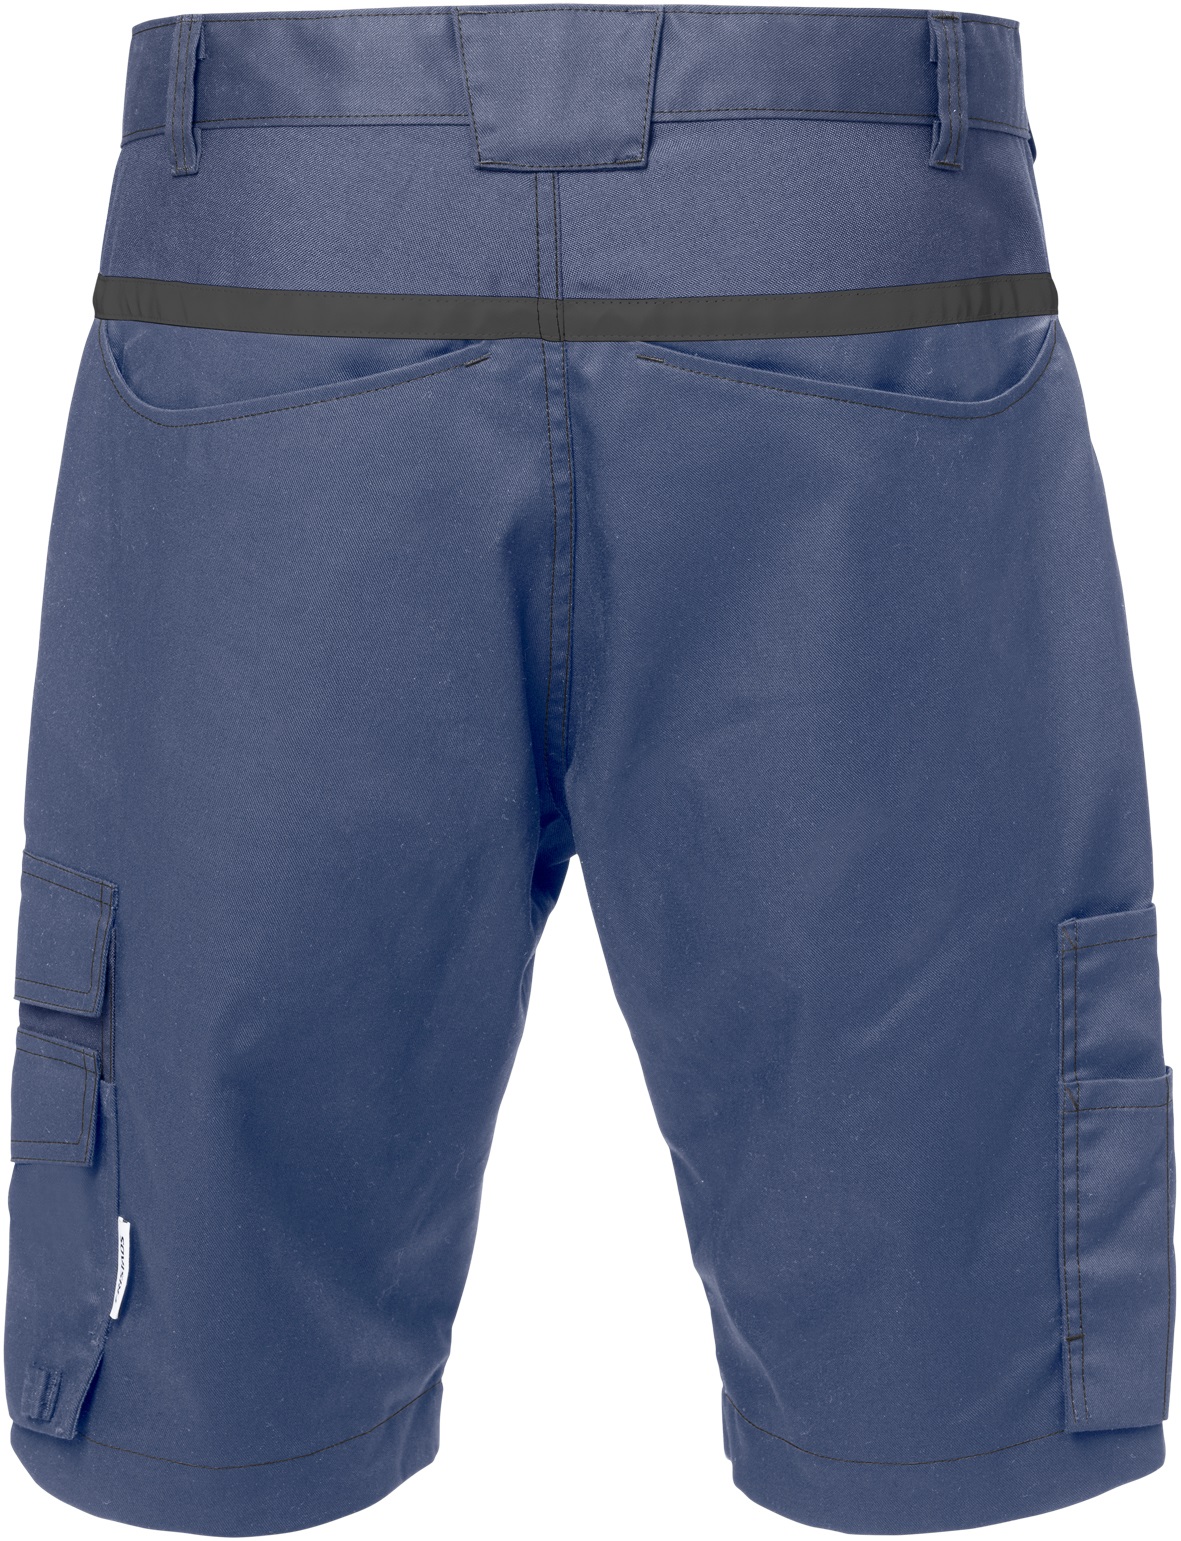 FRISTADS Shorts 2562 STFP - Blau